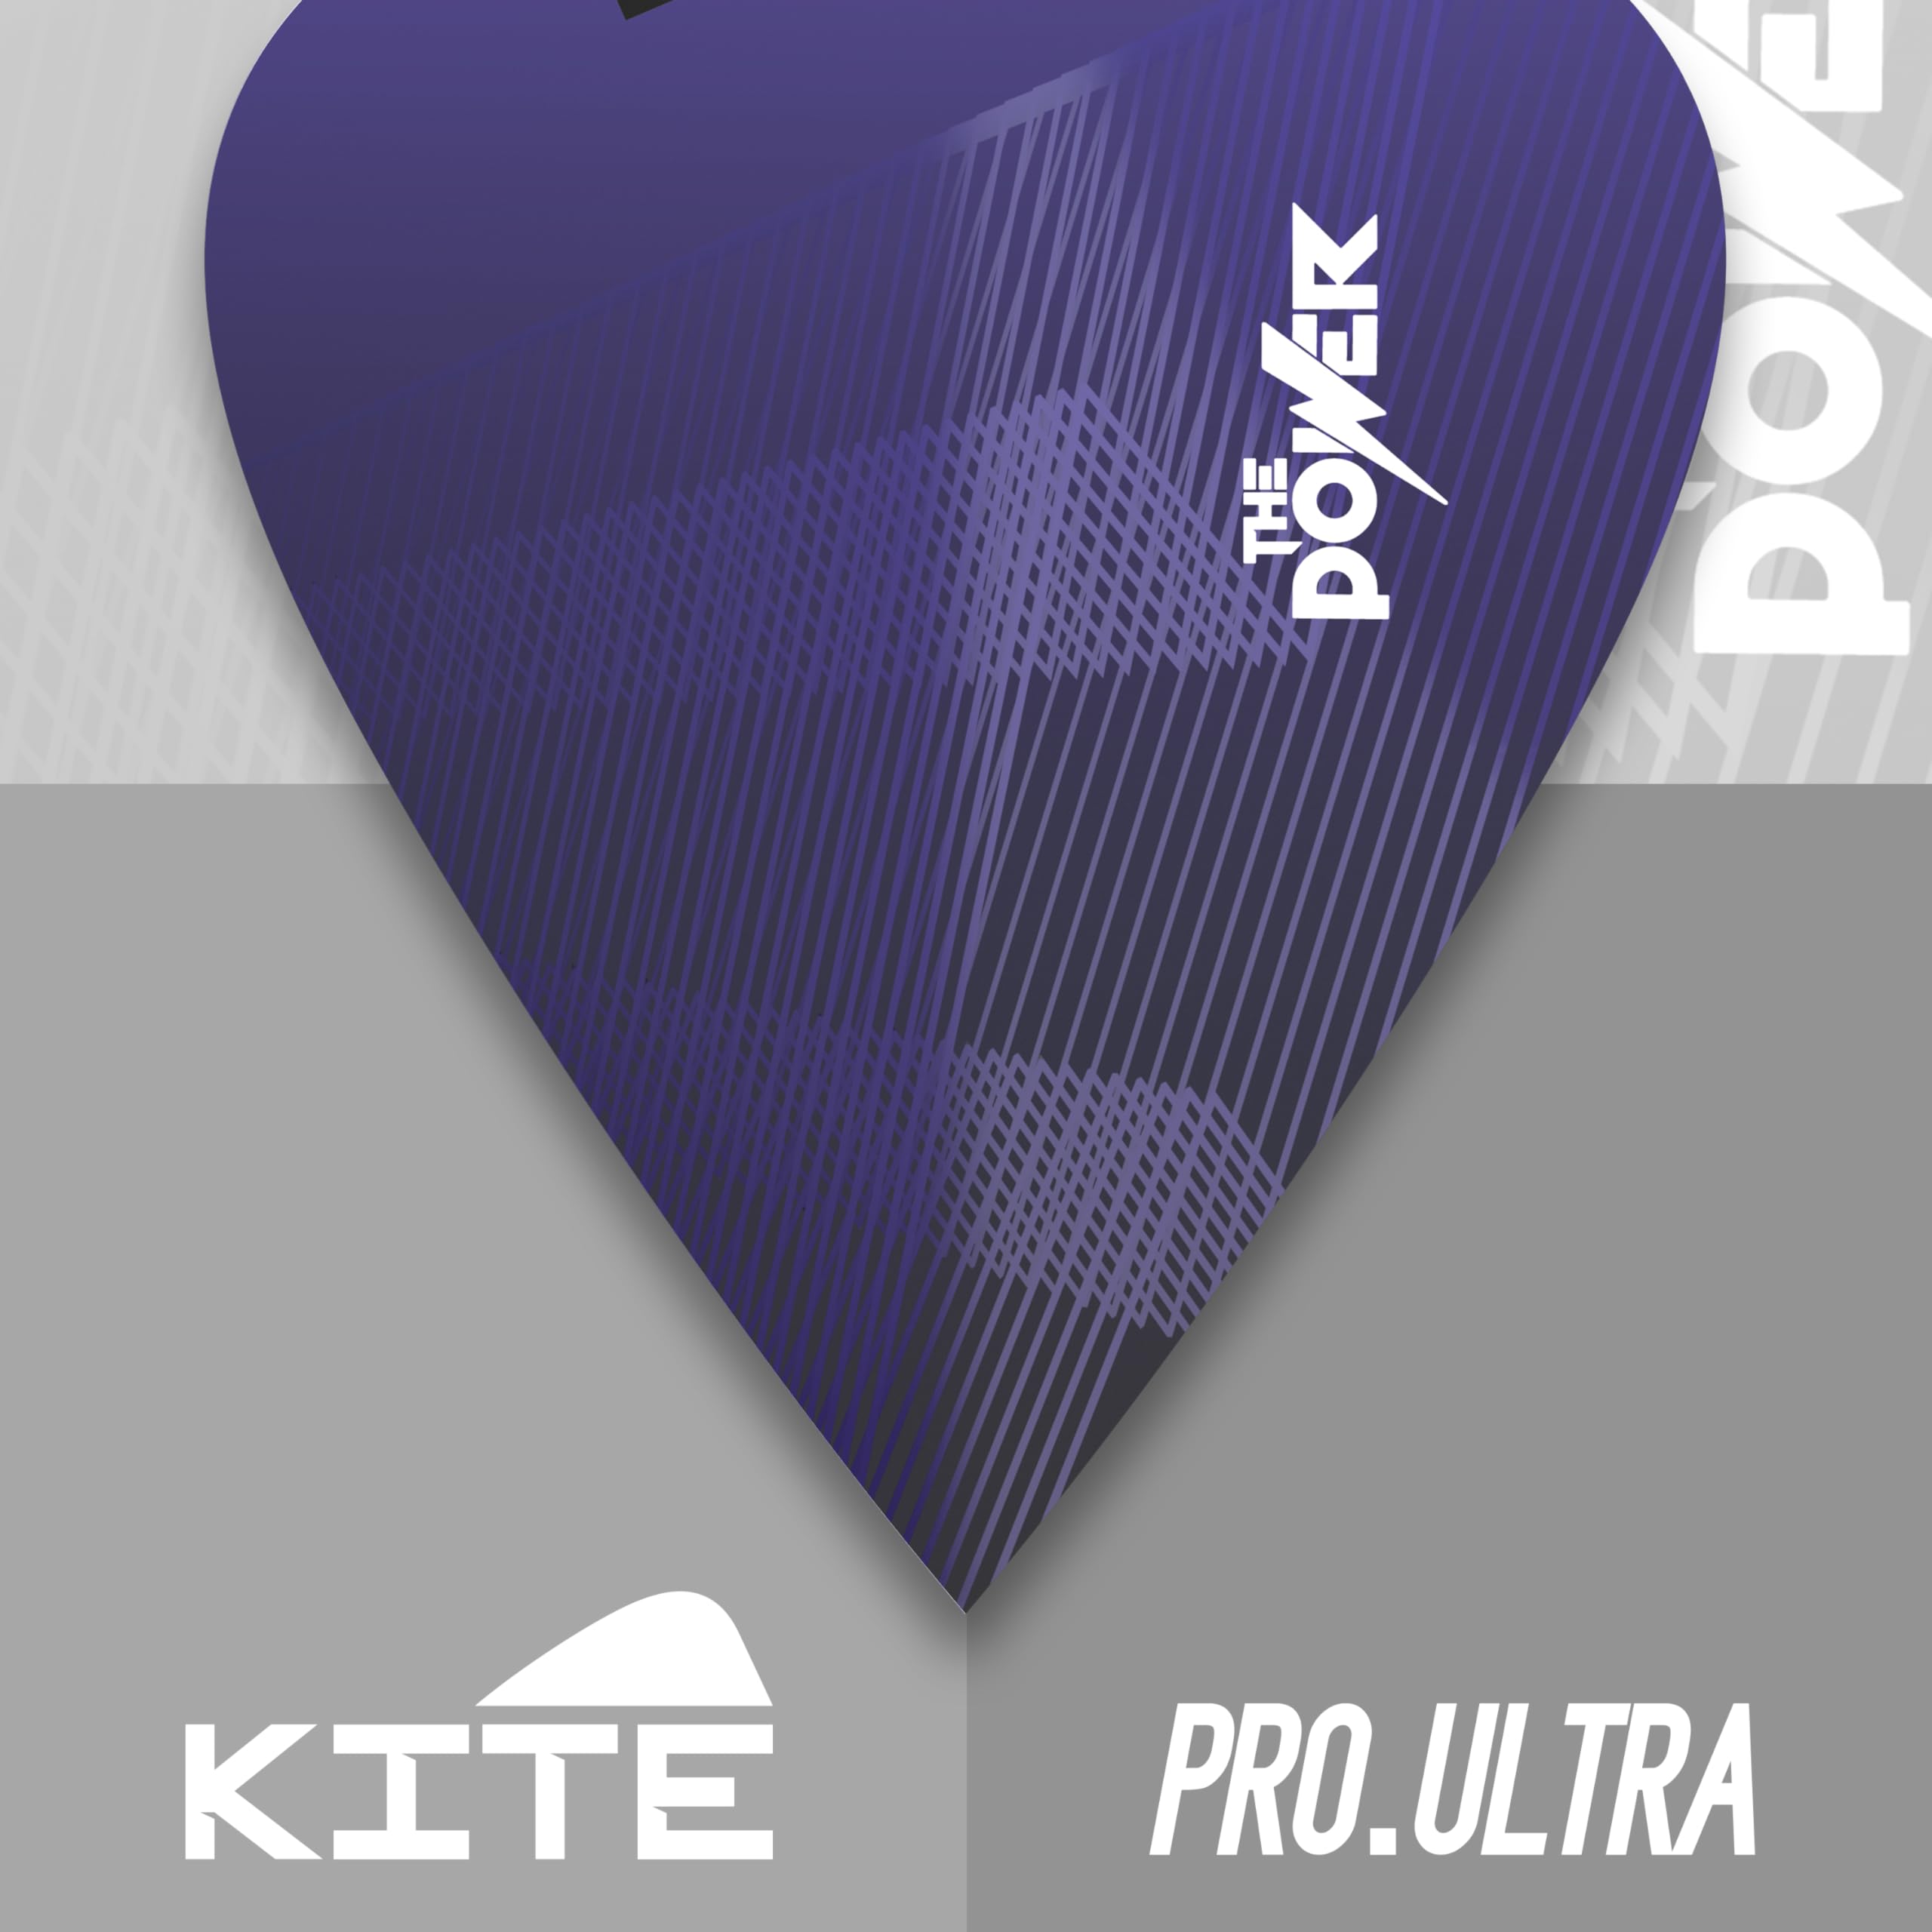 TARGET Phil Taylor G10 Kite Pro Ultra Dart Flights - 3 Set Pack (9 in total)